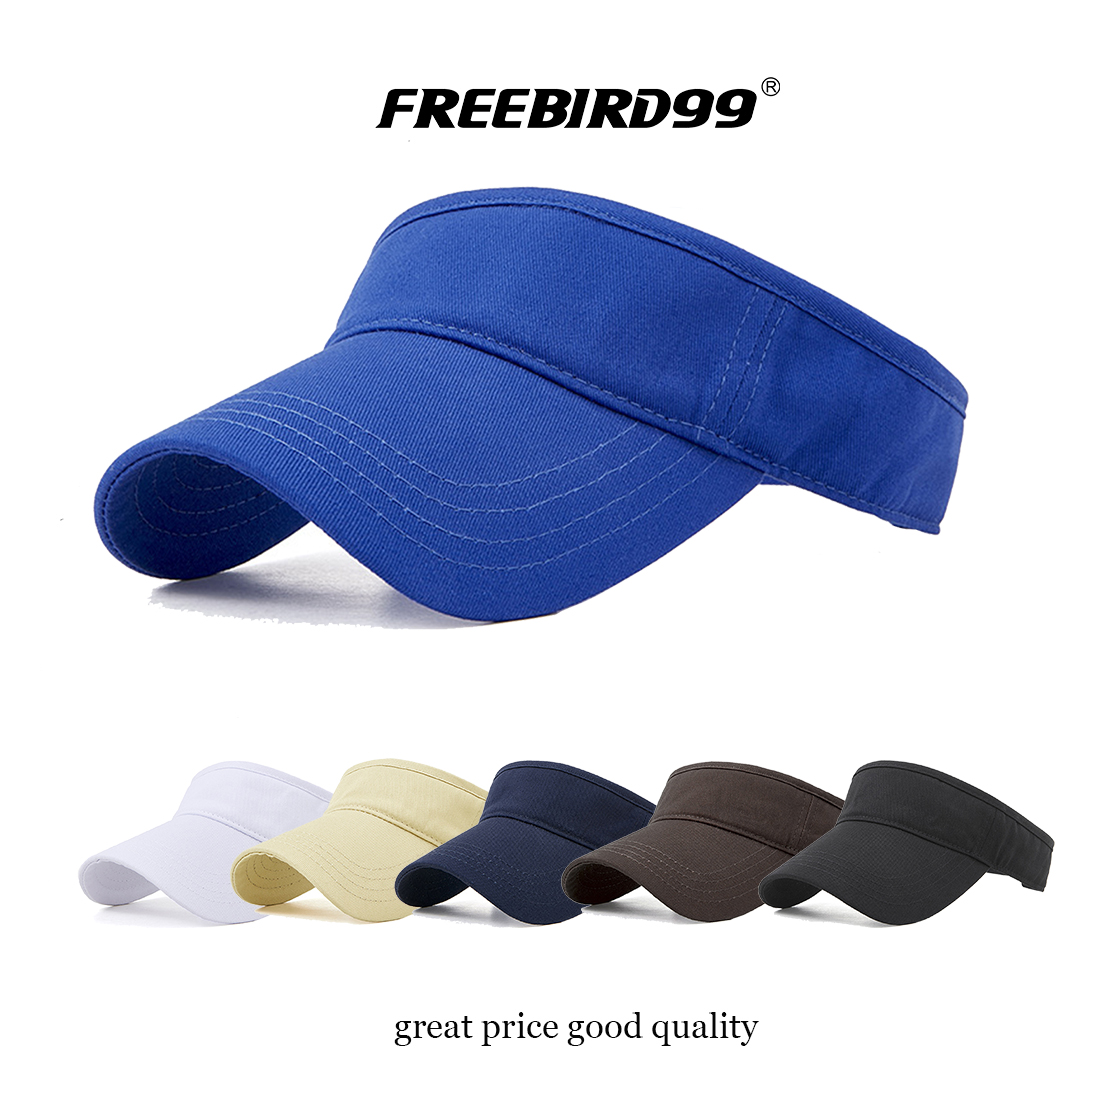 Visor Adjustable Unisex Sun Cap #2240 - FREEBIRD99 online hats shop